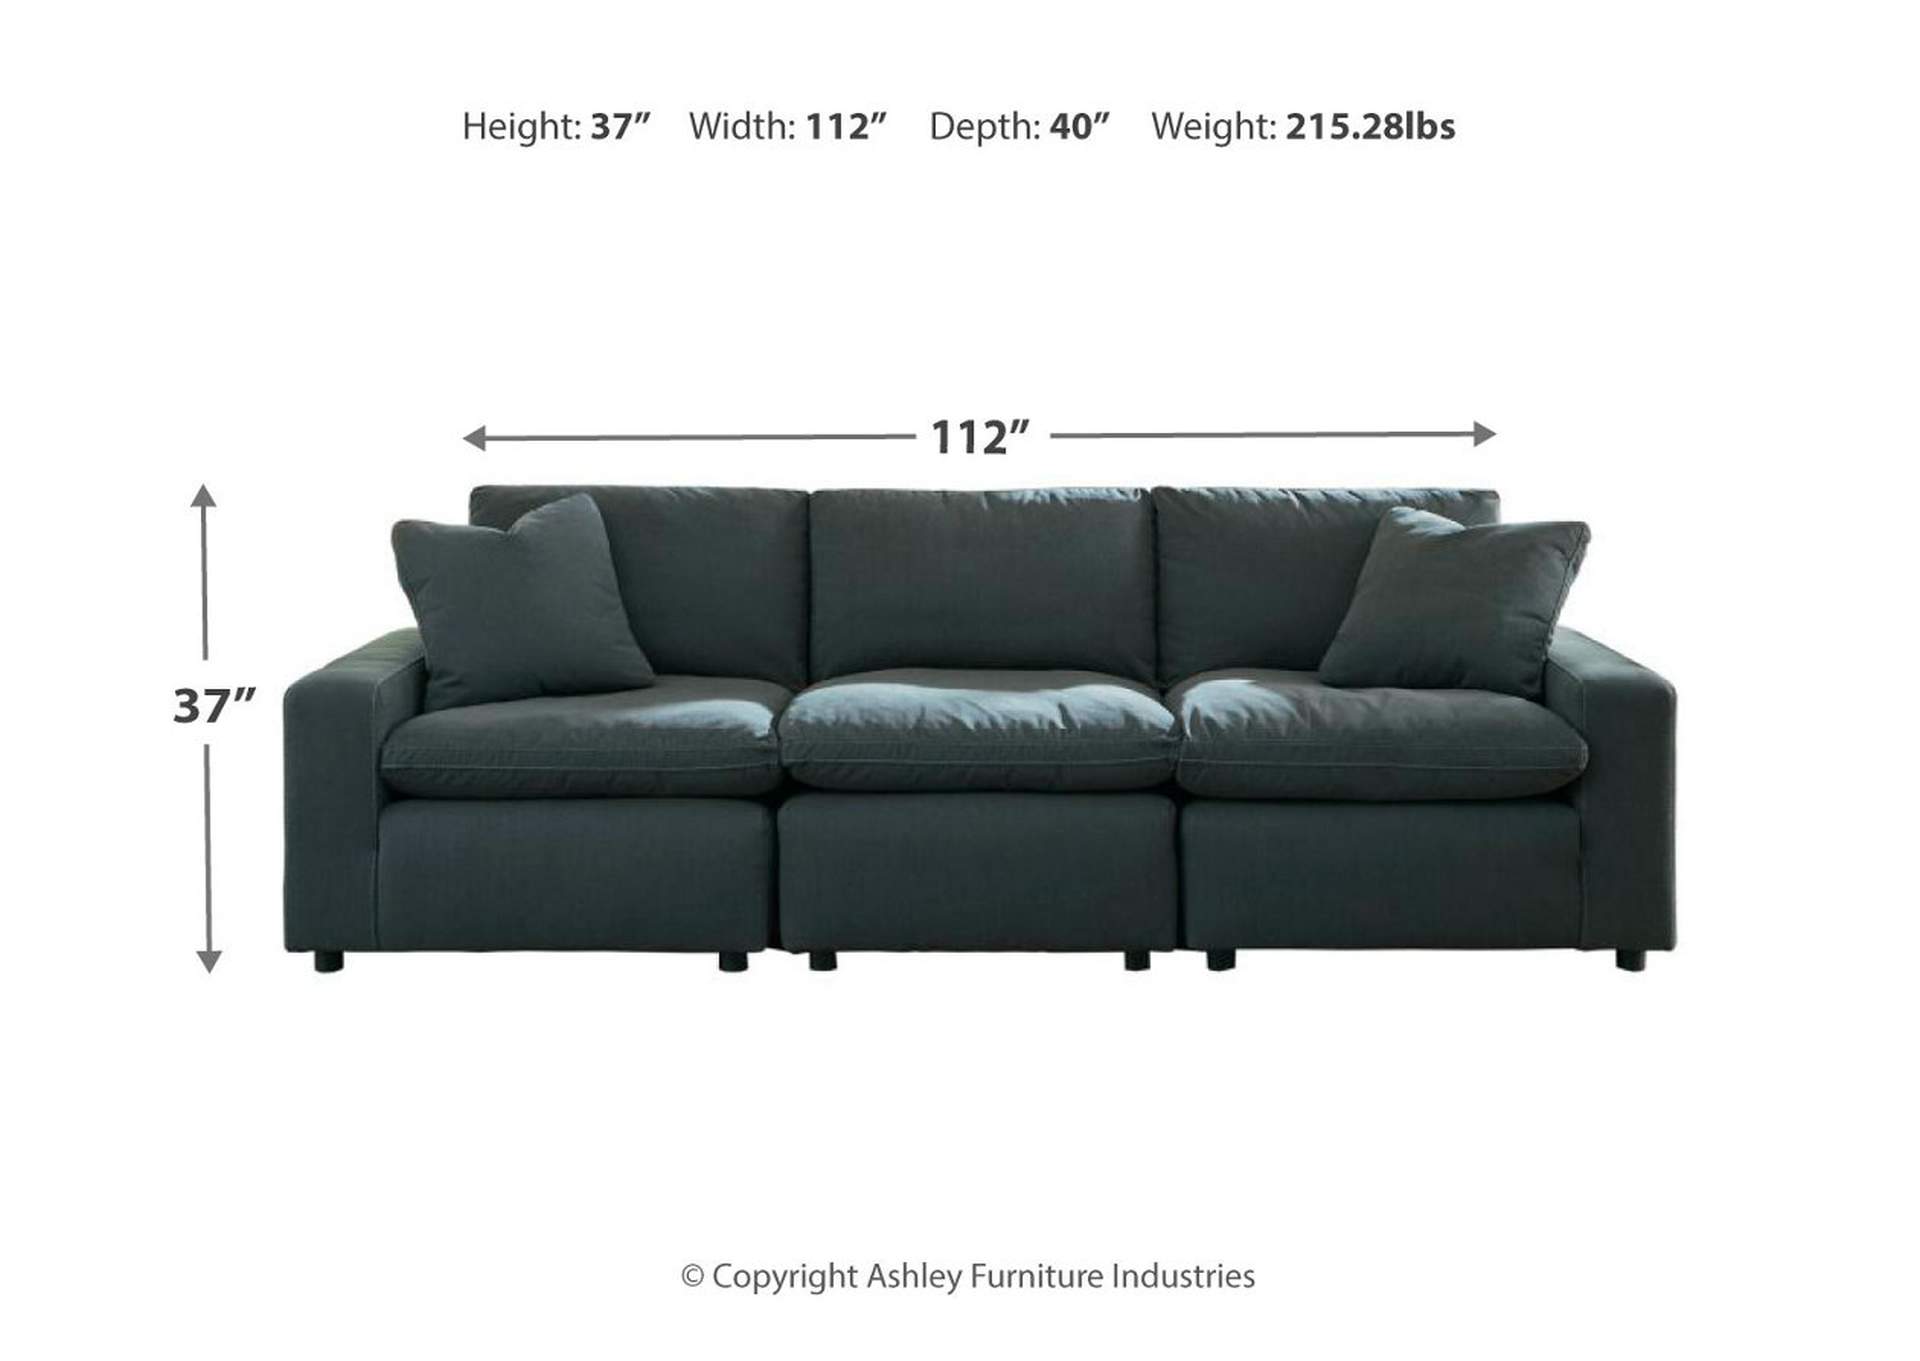 Savesto 3-Piece Sectional Sofa,Signature Design By Ashley